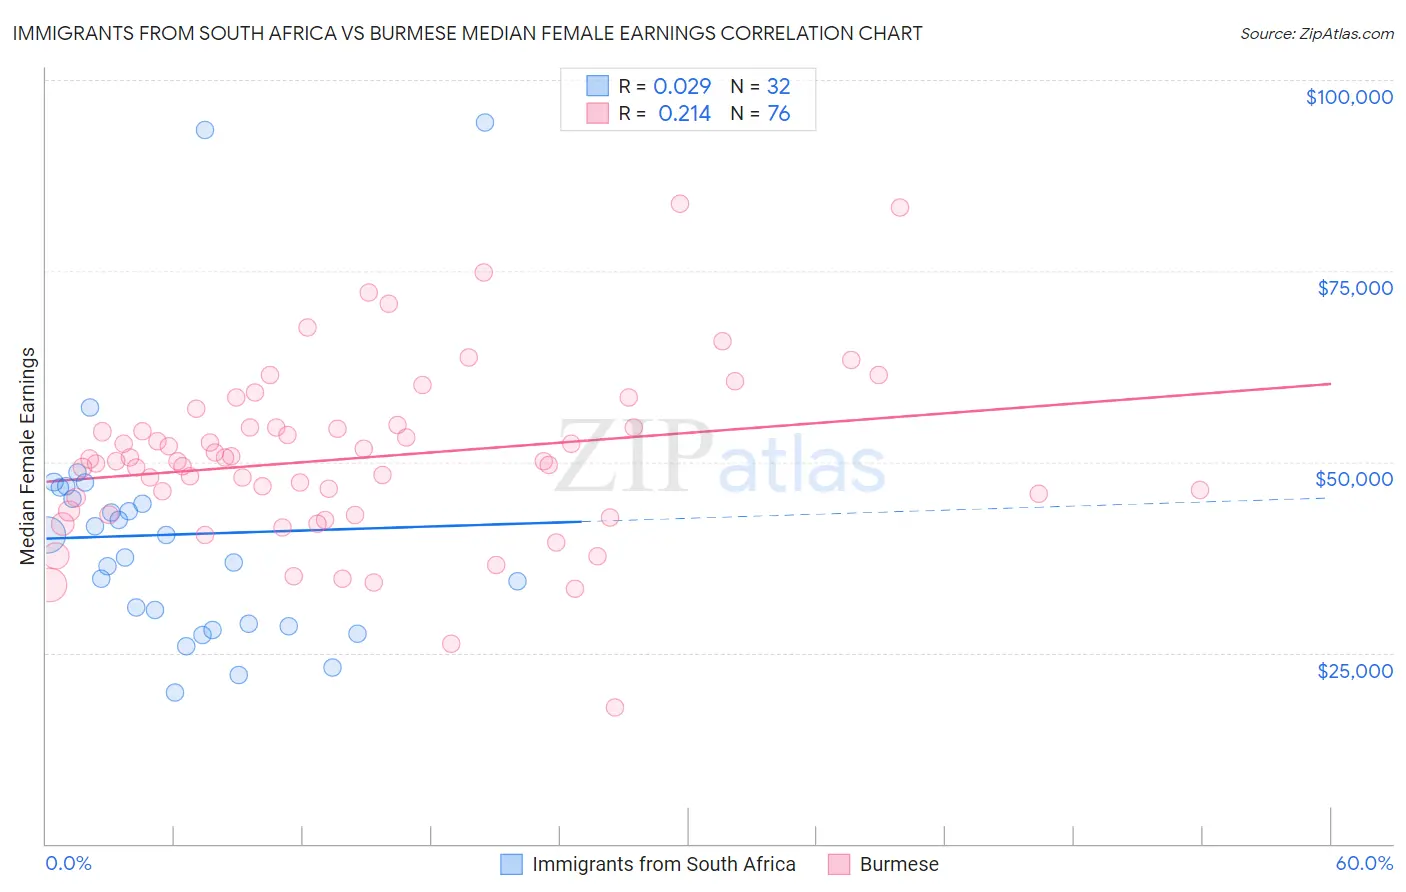 Immigrants from South Africa vs Burmese Median Female Earnings